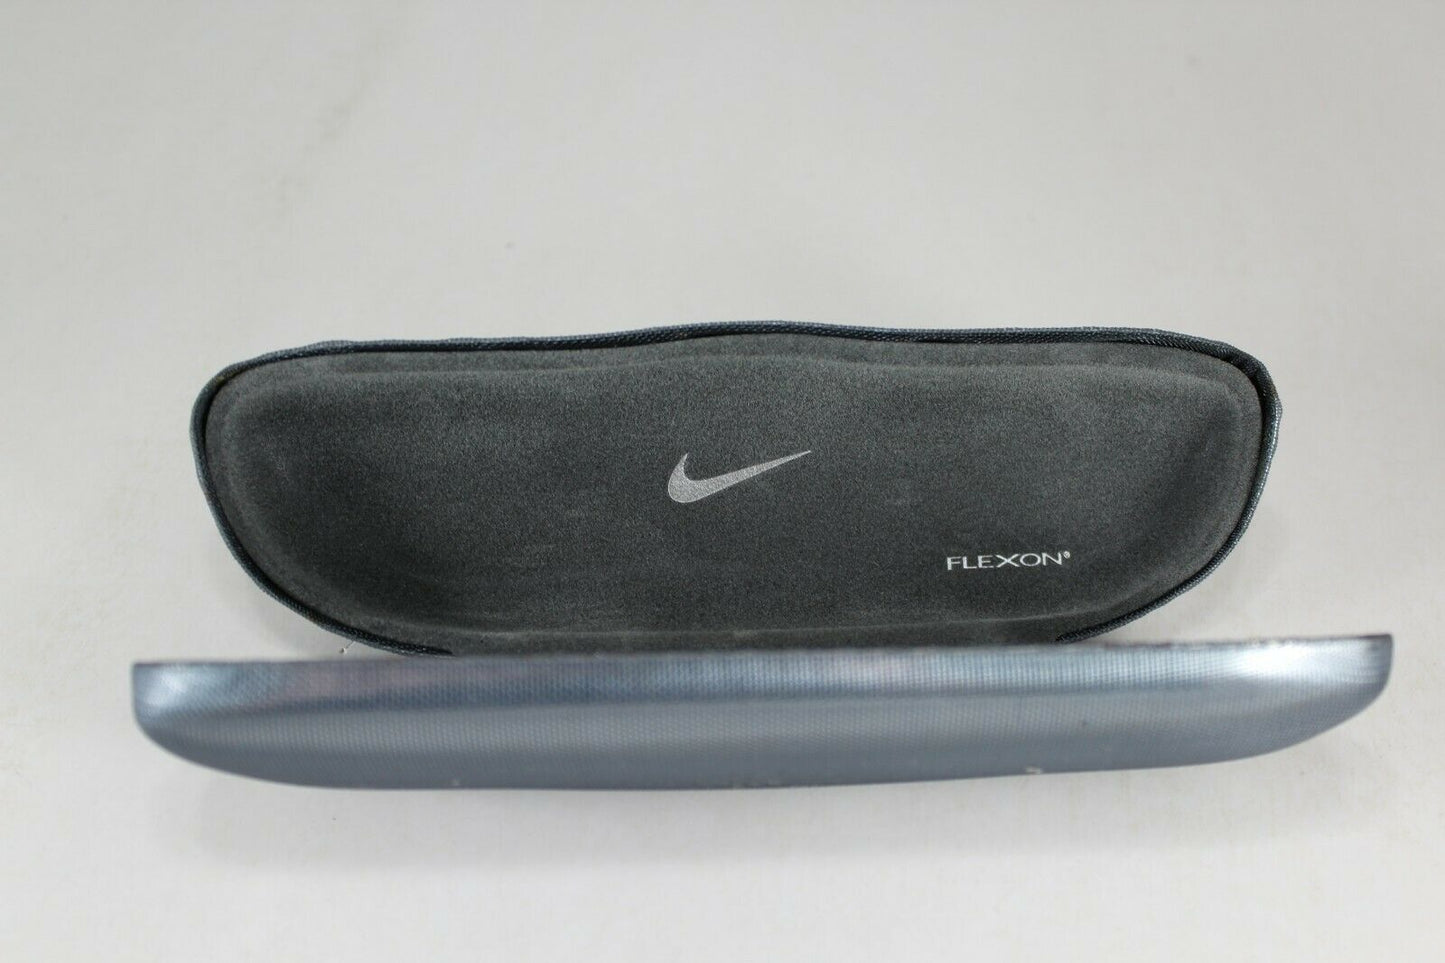 Nike NIKE 7129-709 52mm New Eyeglasses